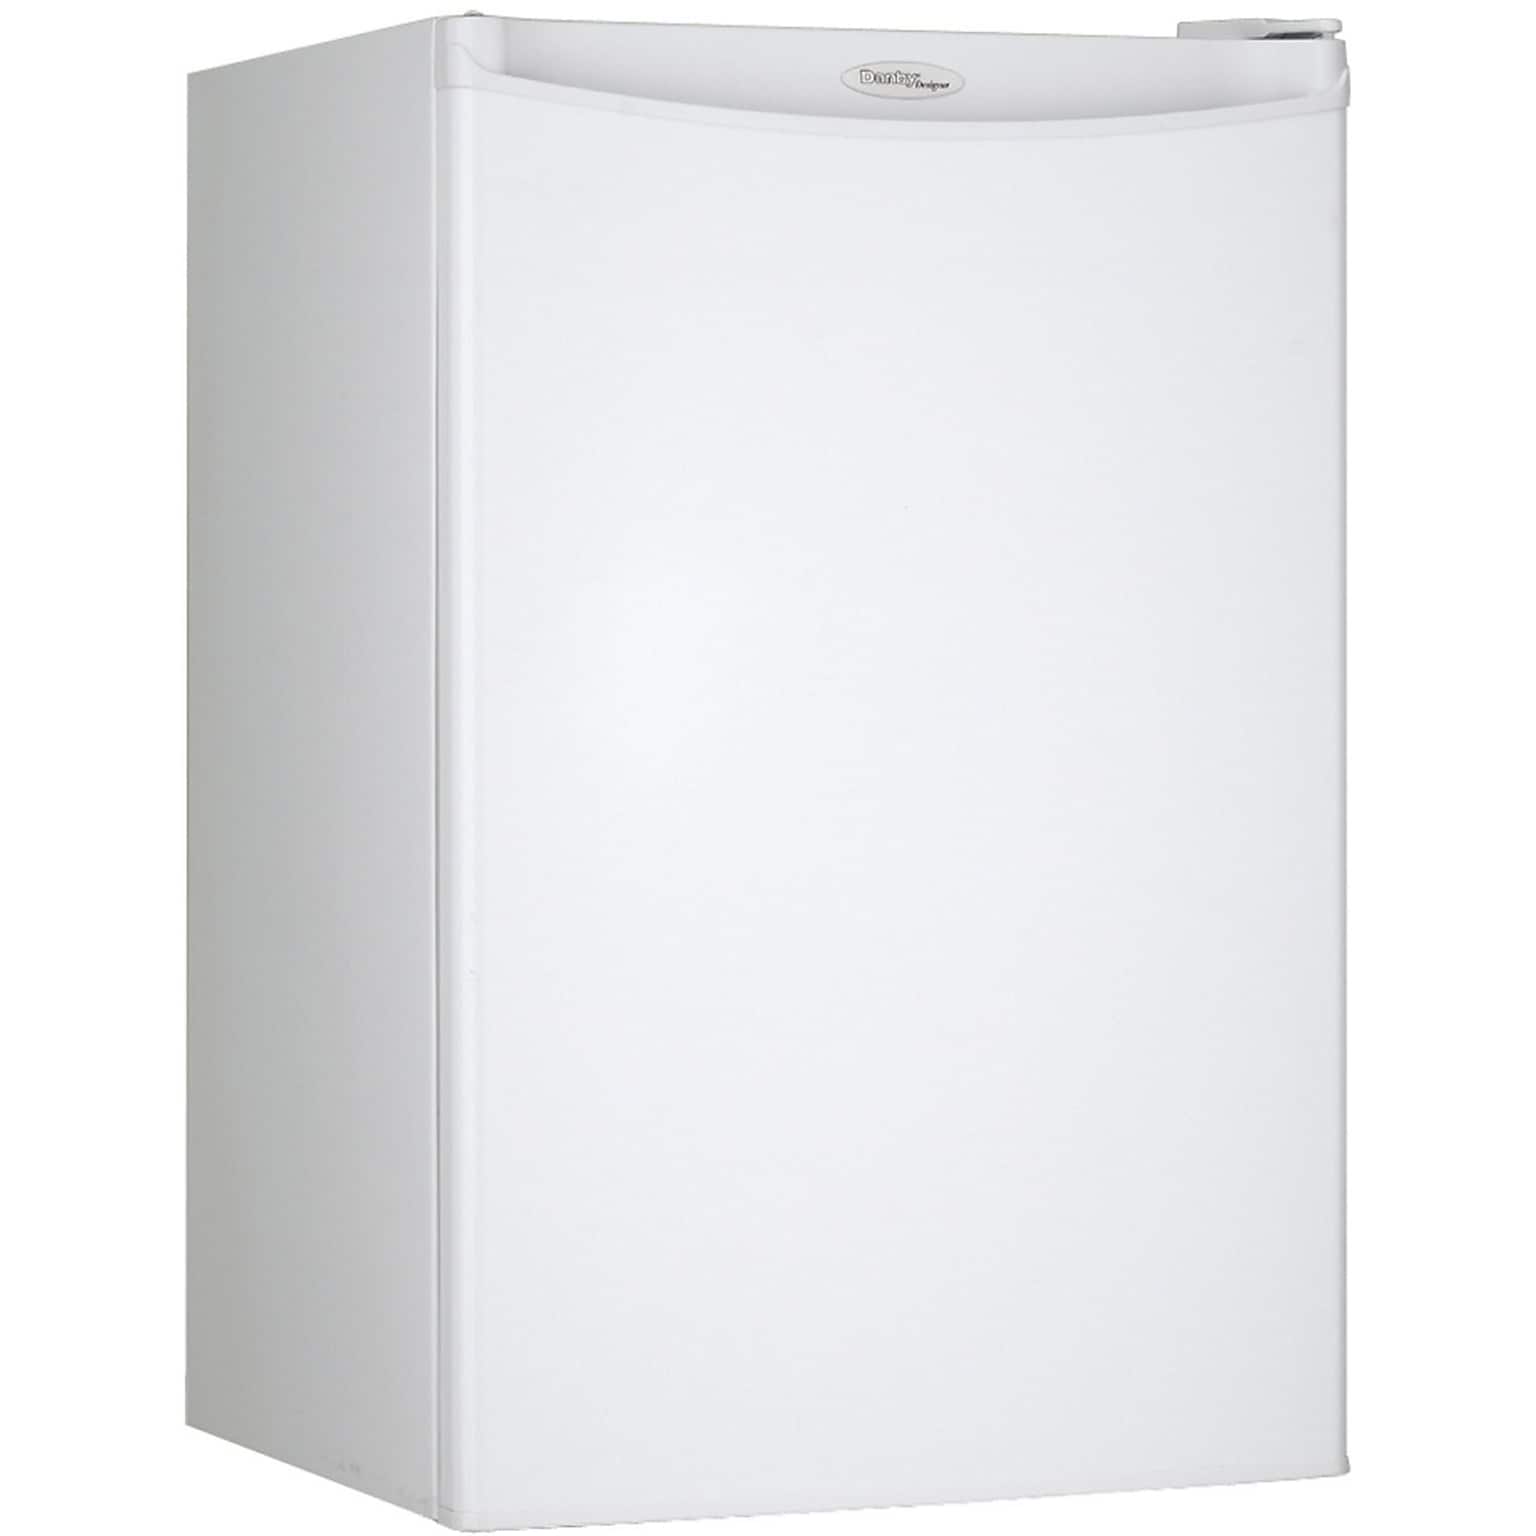 Danby Designer 4.4 Cu. Ft. Refrigerator, White (DAR044A4WDD)